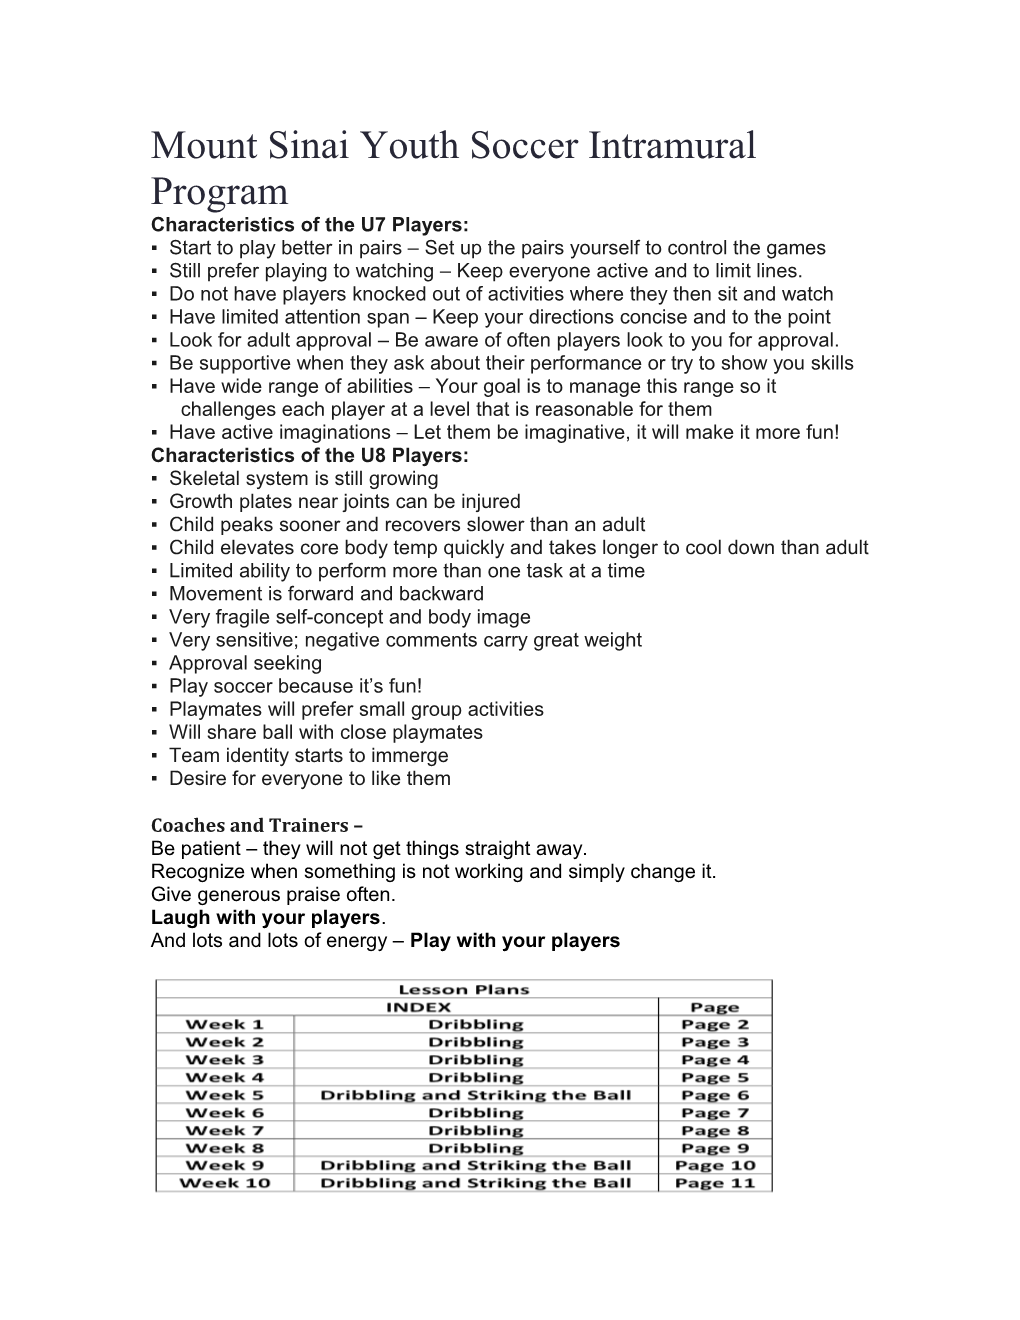 Mount Sinai Youth Soccer Intramural Program